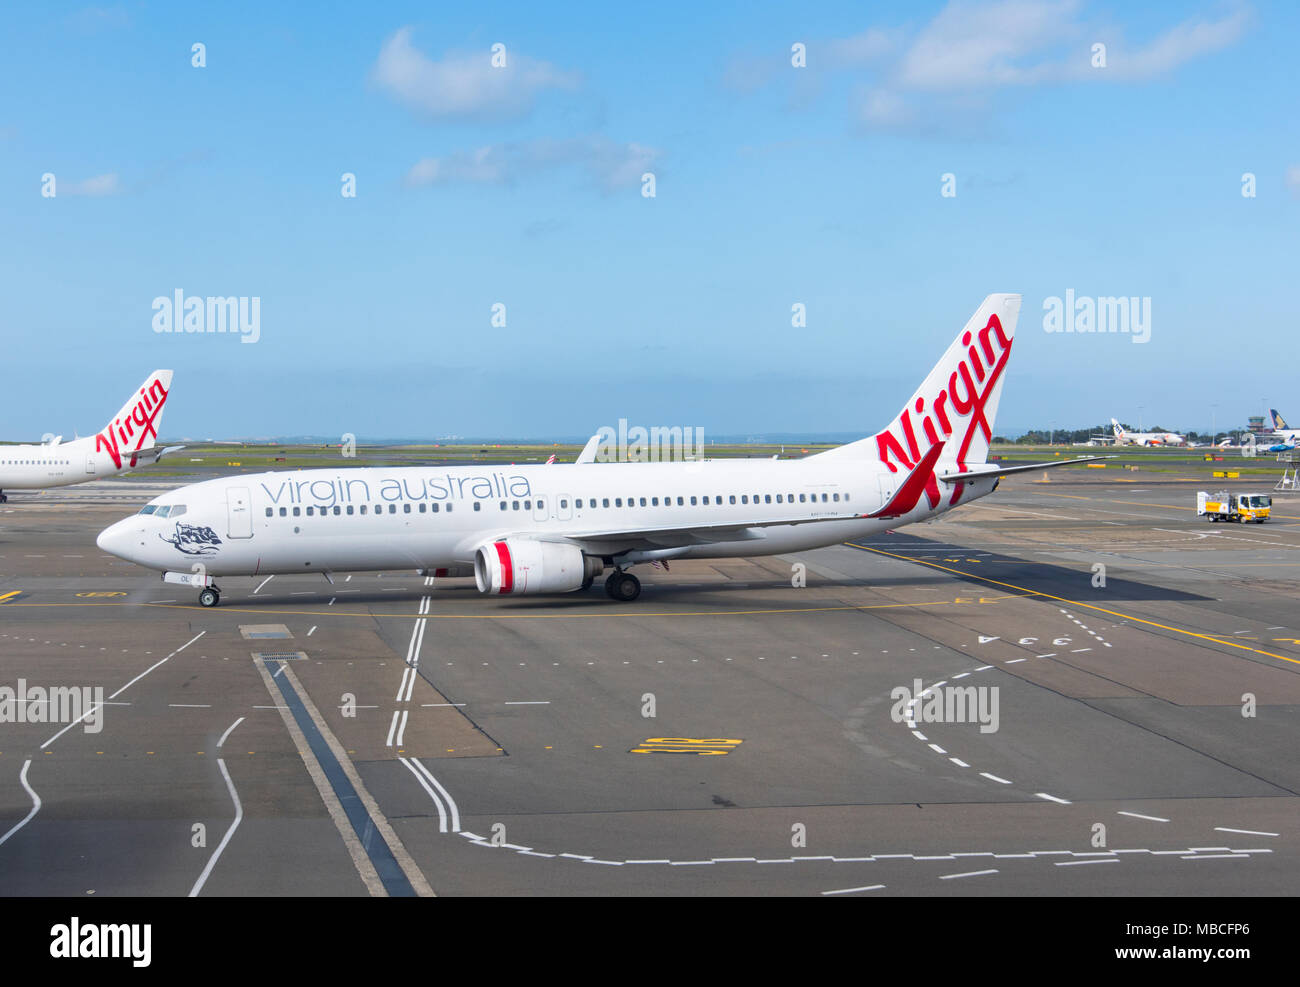 A Virgin Australia Boeing 737-800 aircraft on the tarmac at Sydney airport, Australia Stock Photo